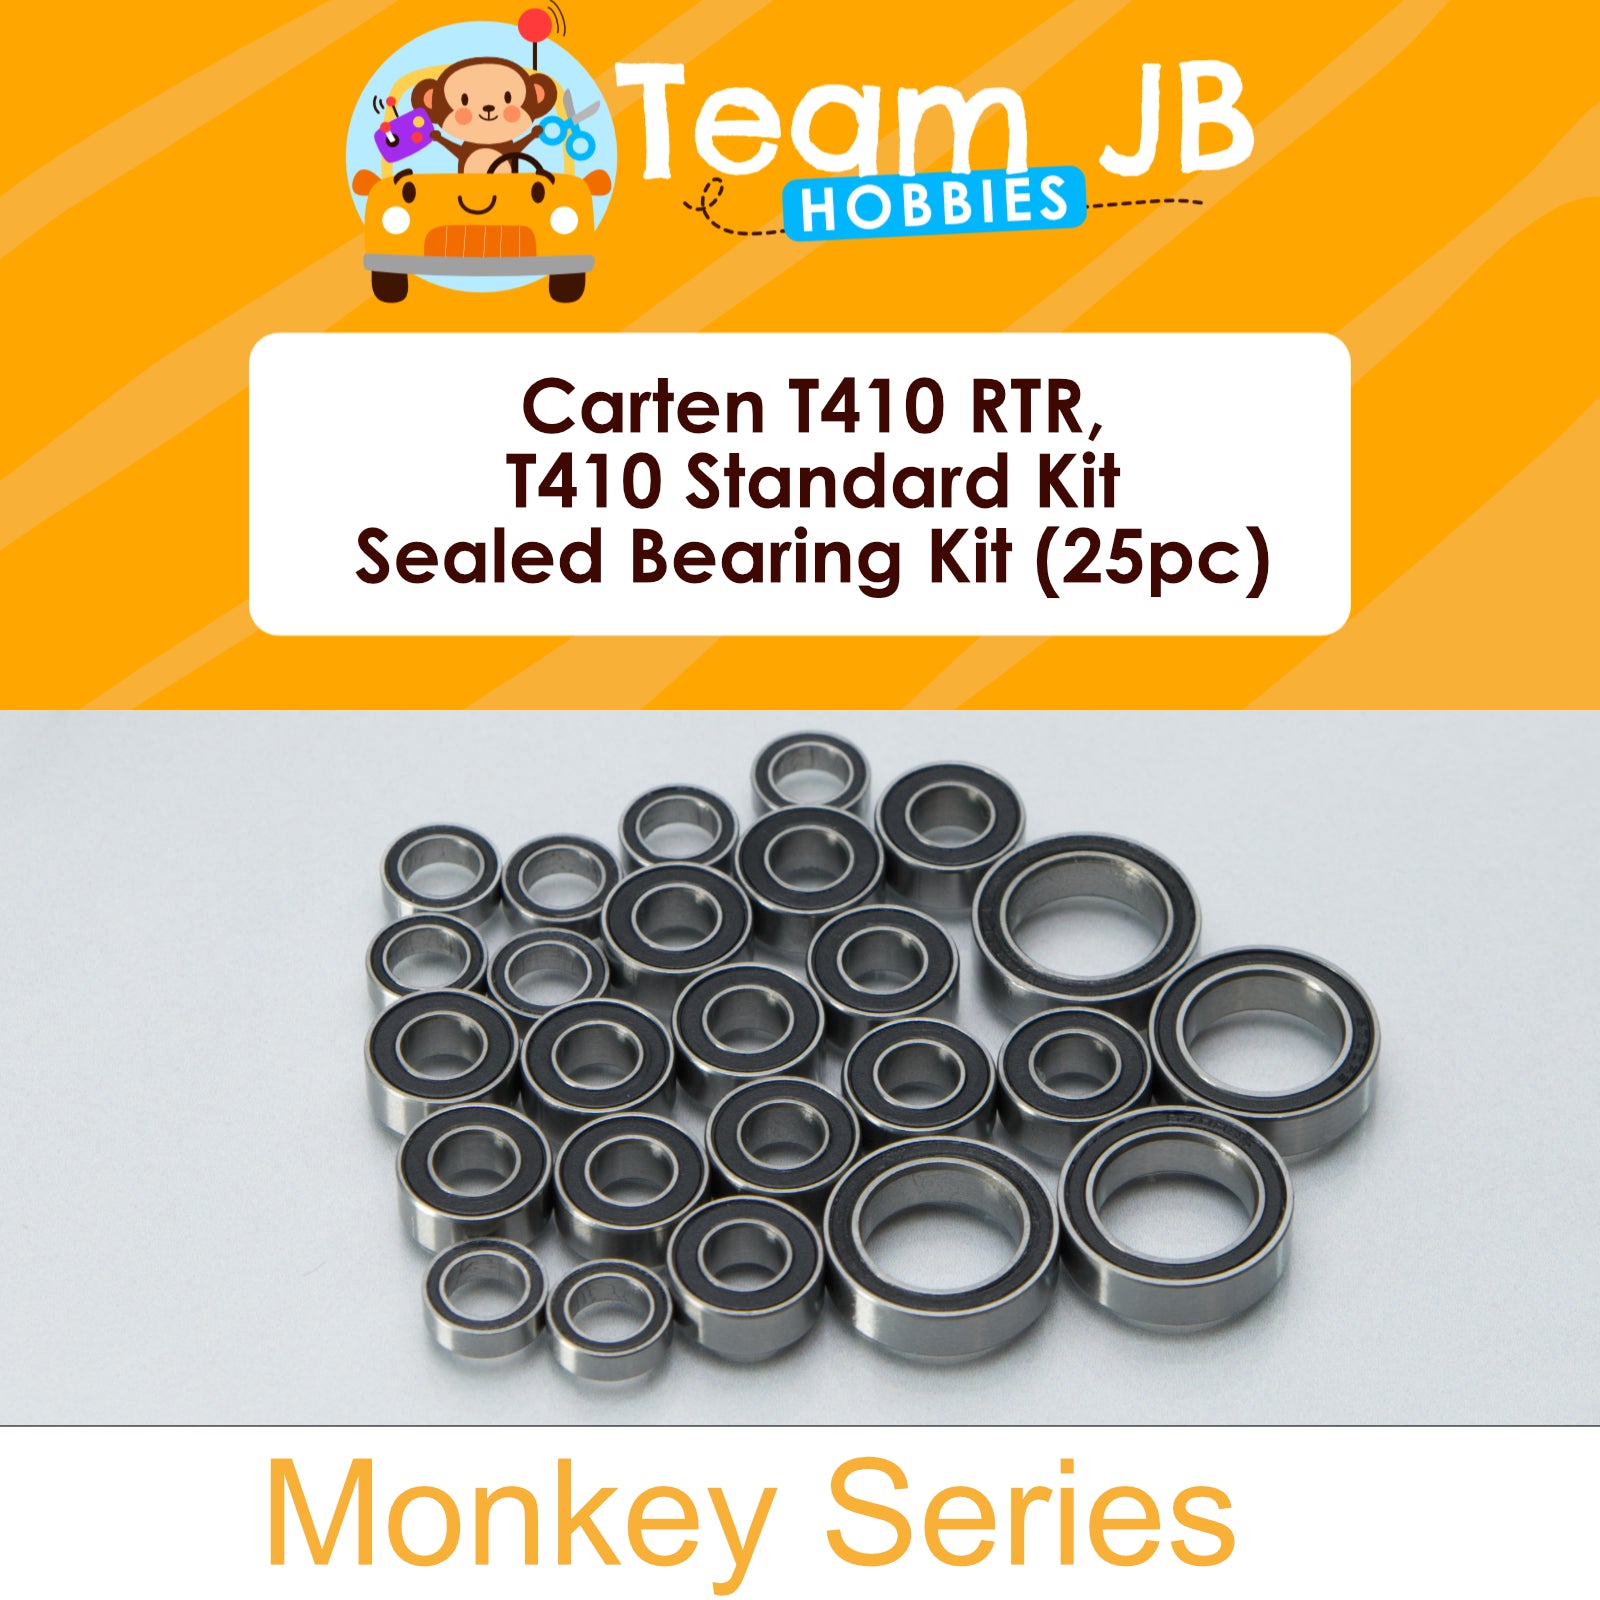 Carten T410 RTR, T410 Standard Kit - Sealed Bearing Kit